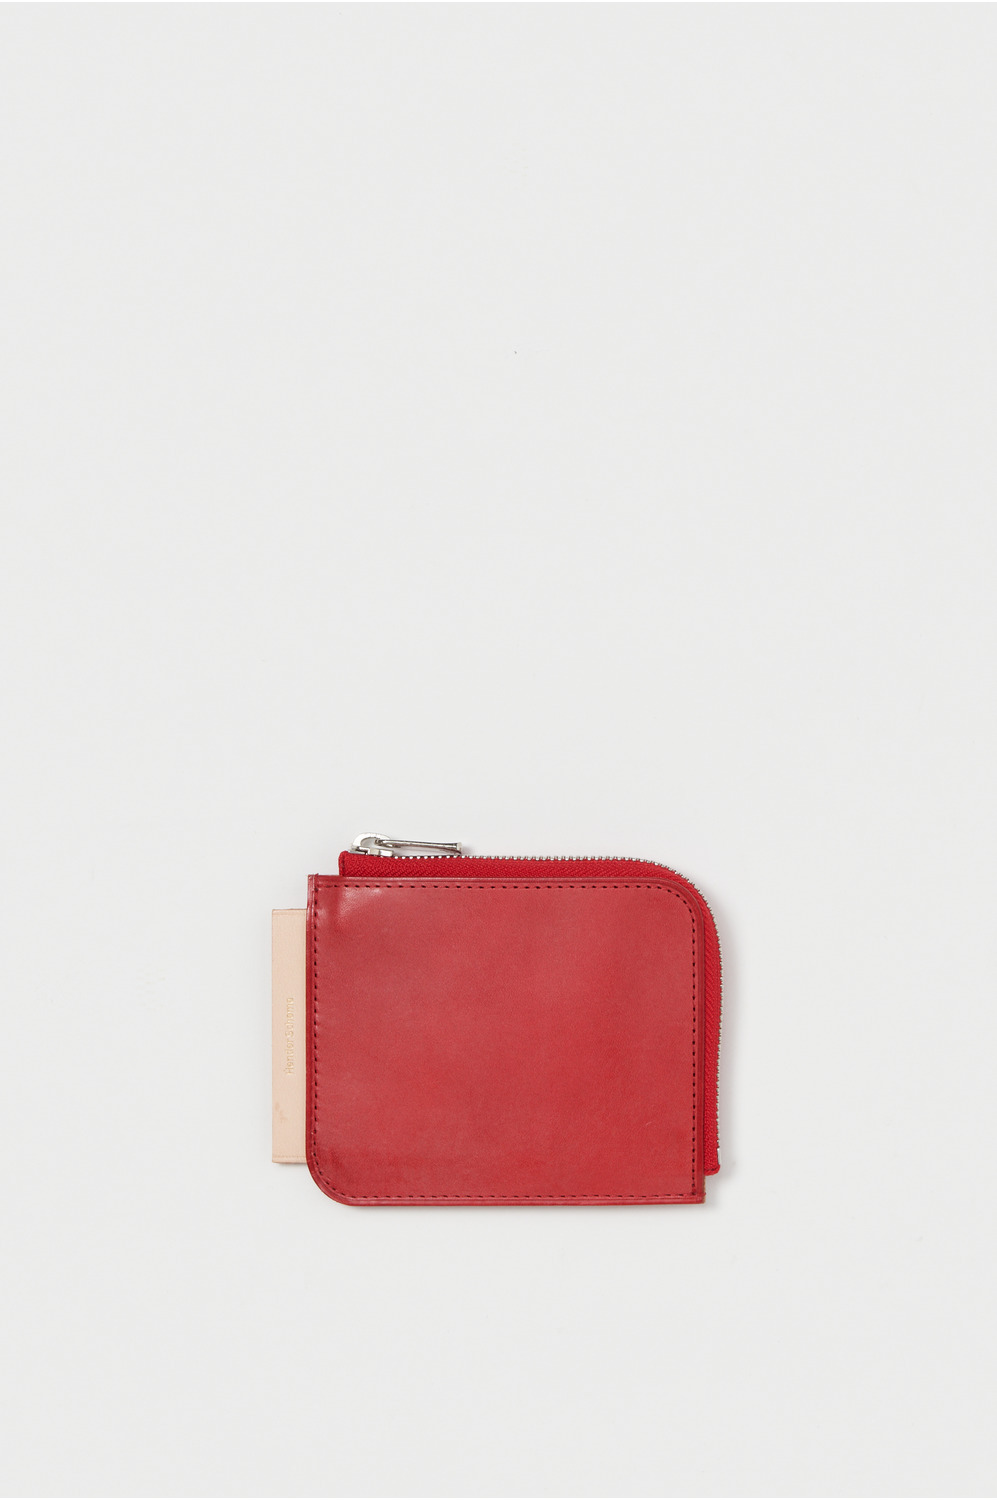 L purse 詳細画像 red 1